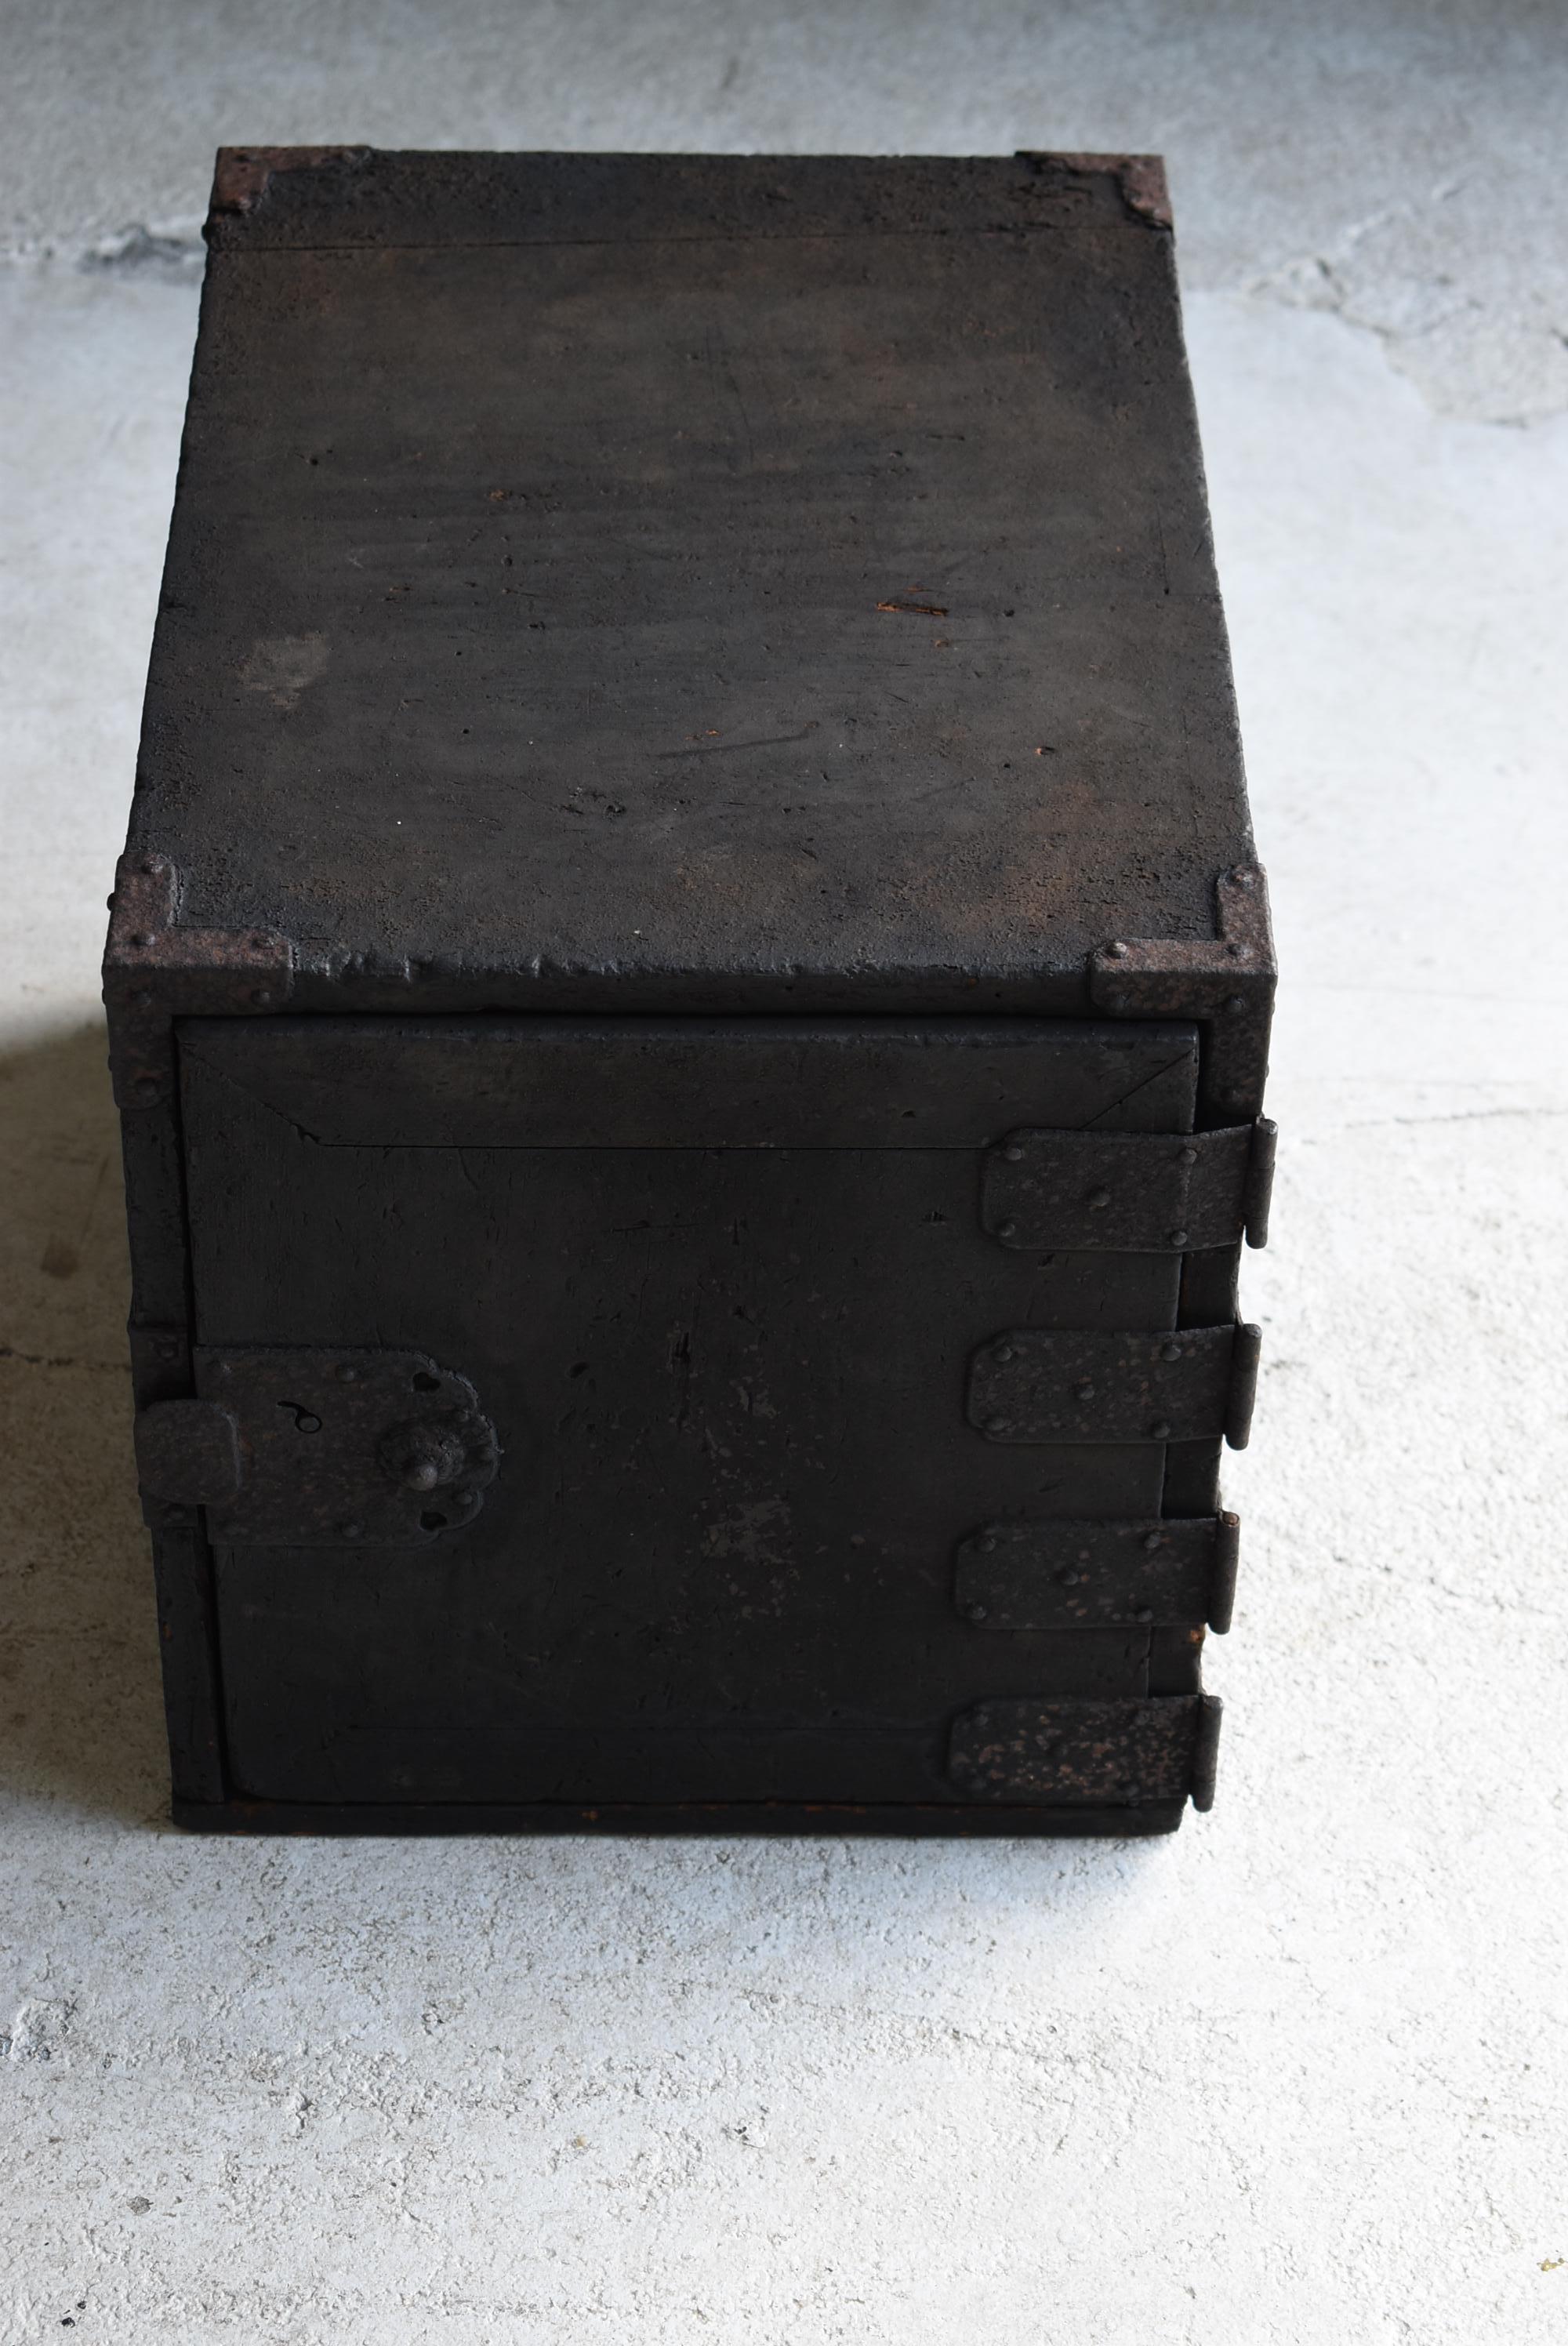 Japanese Antique Black Storage Box 1800s-1860s / Drawer Tansu Wabisabi For Sale 12